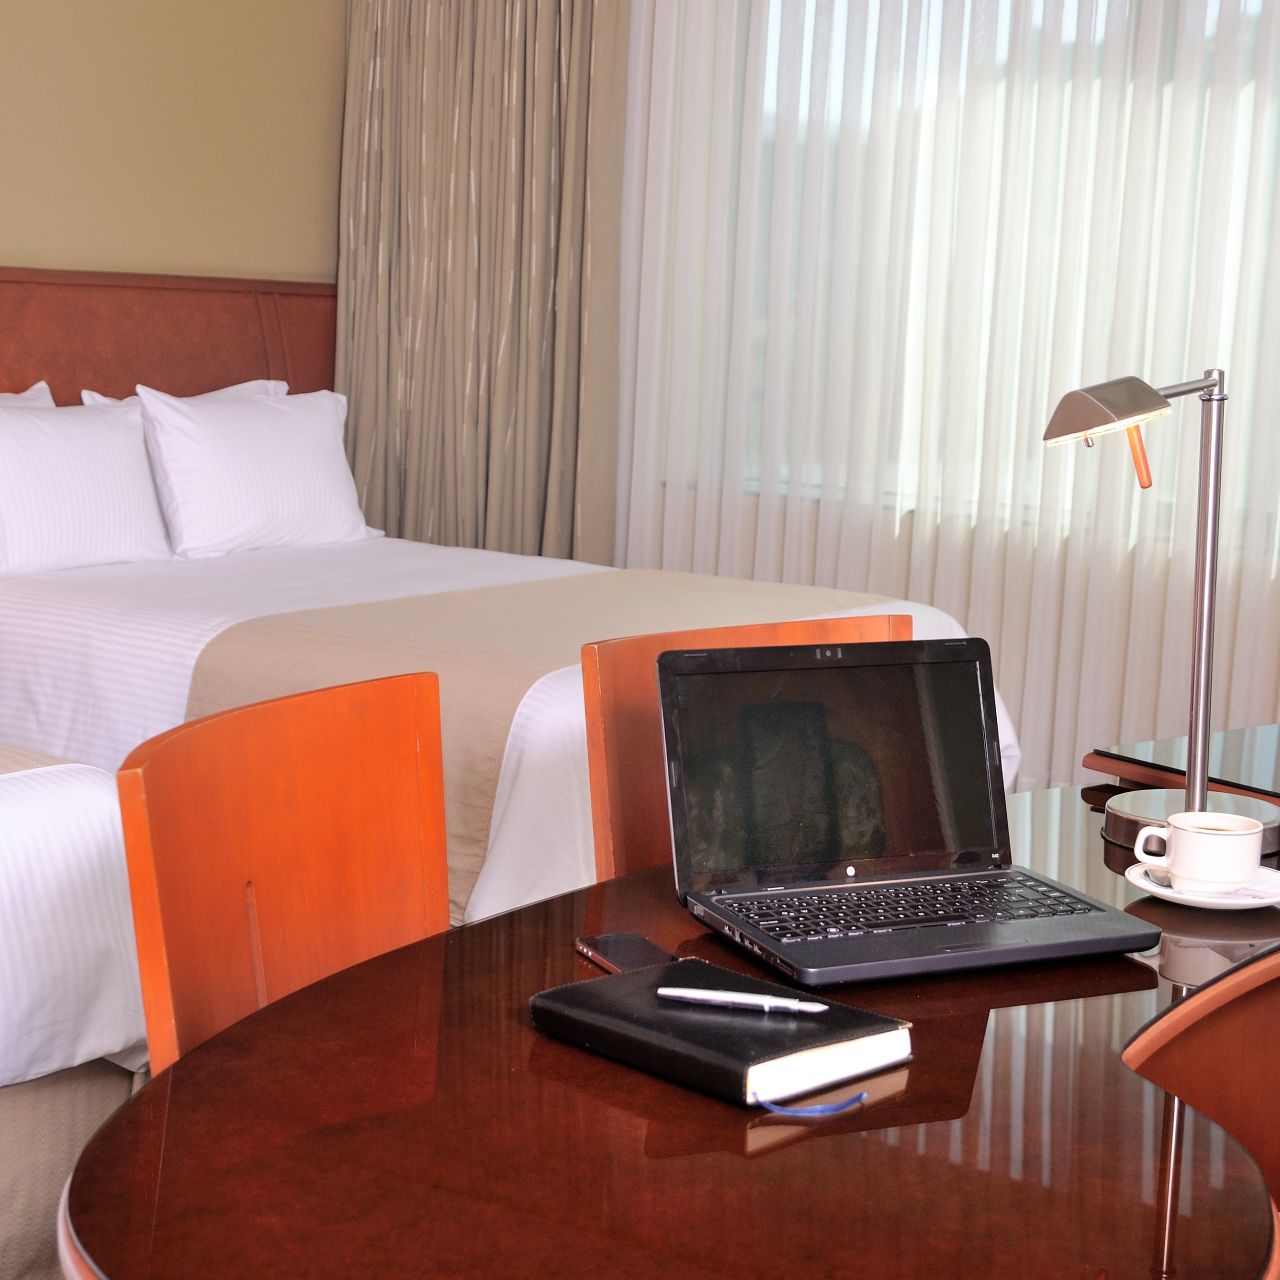 Hotel Camino Real Suites - La Paz - HOTEL INFO